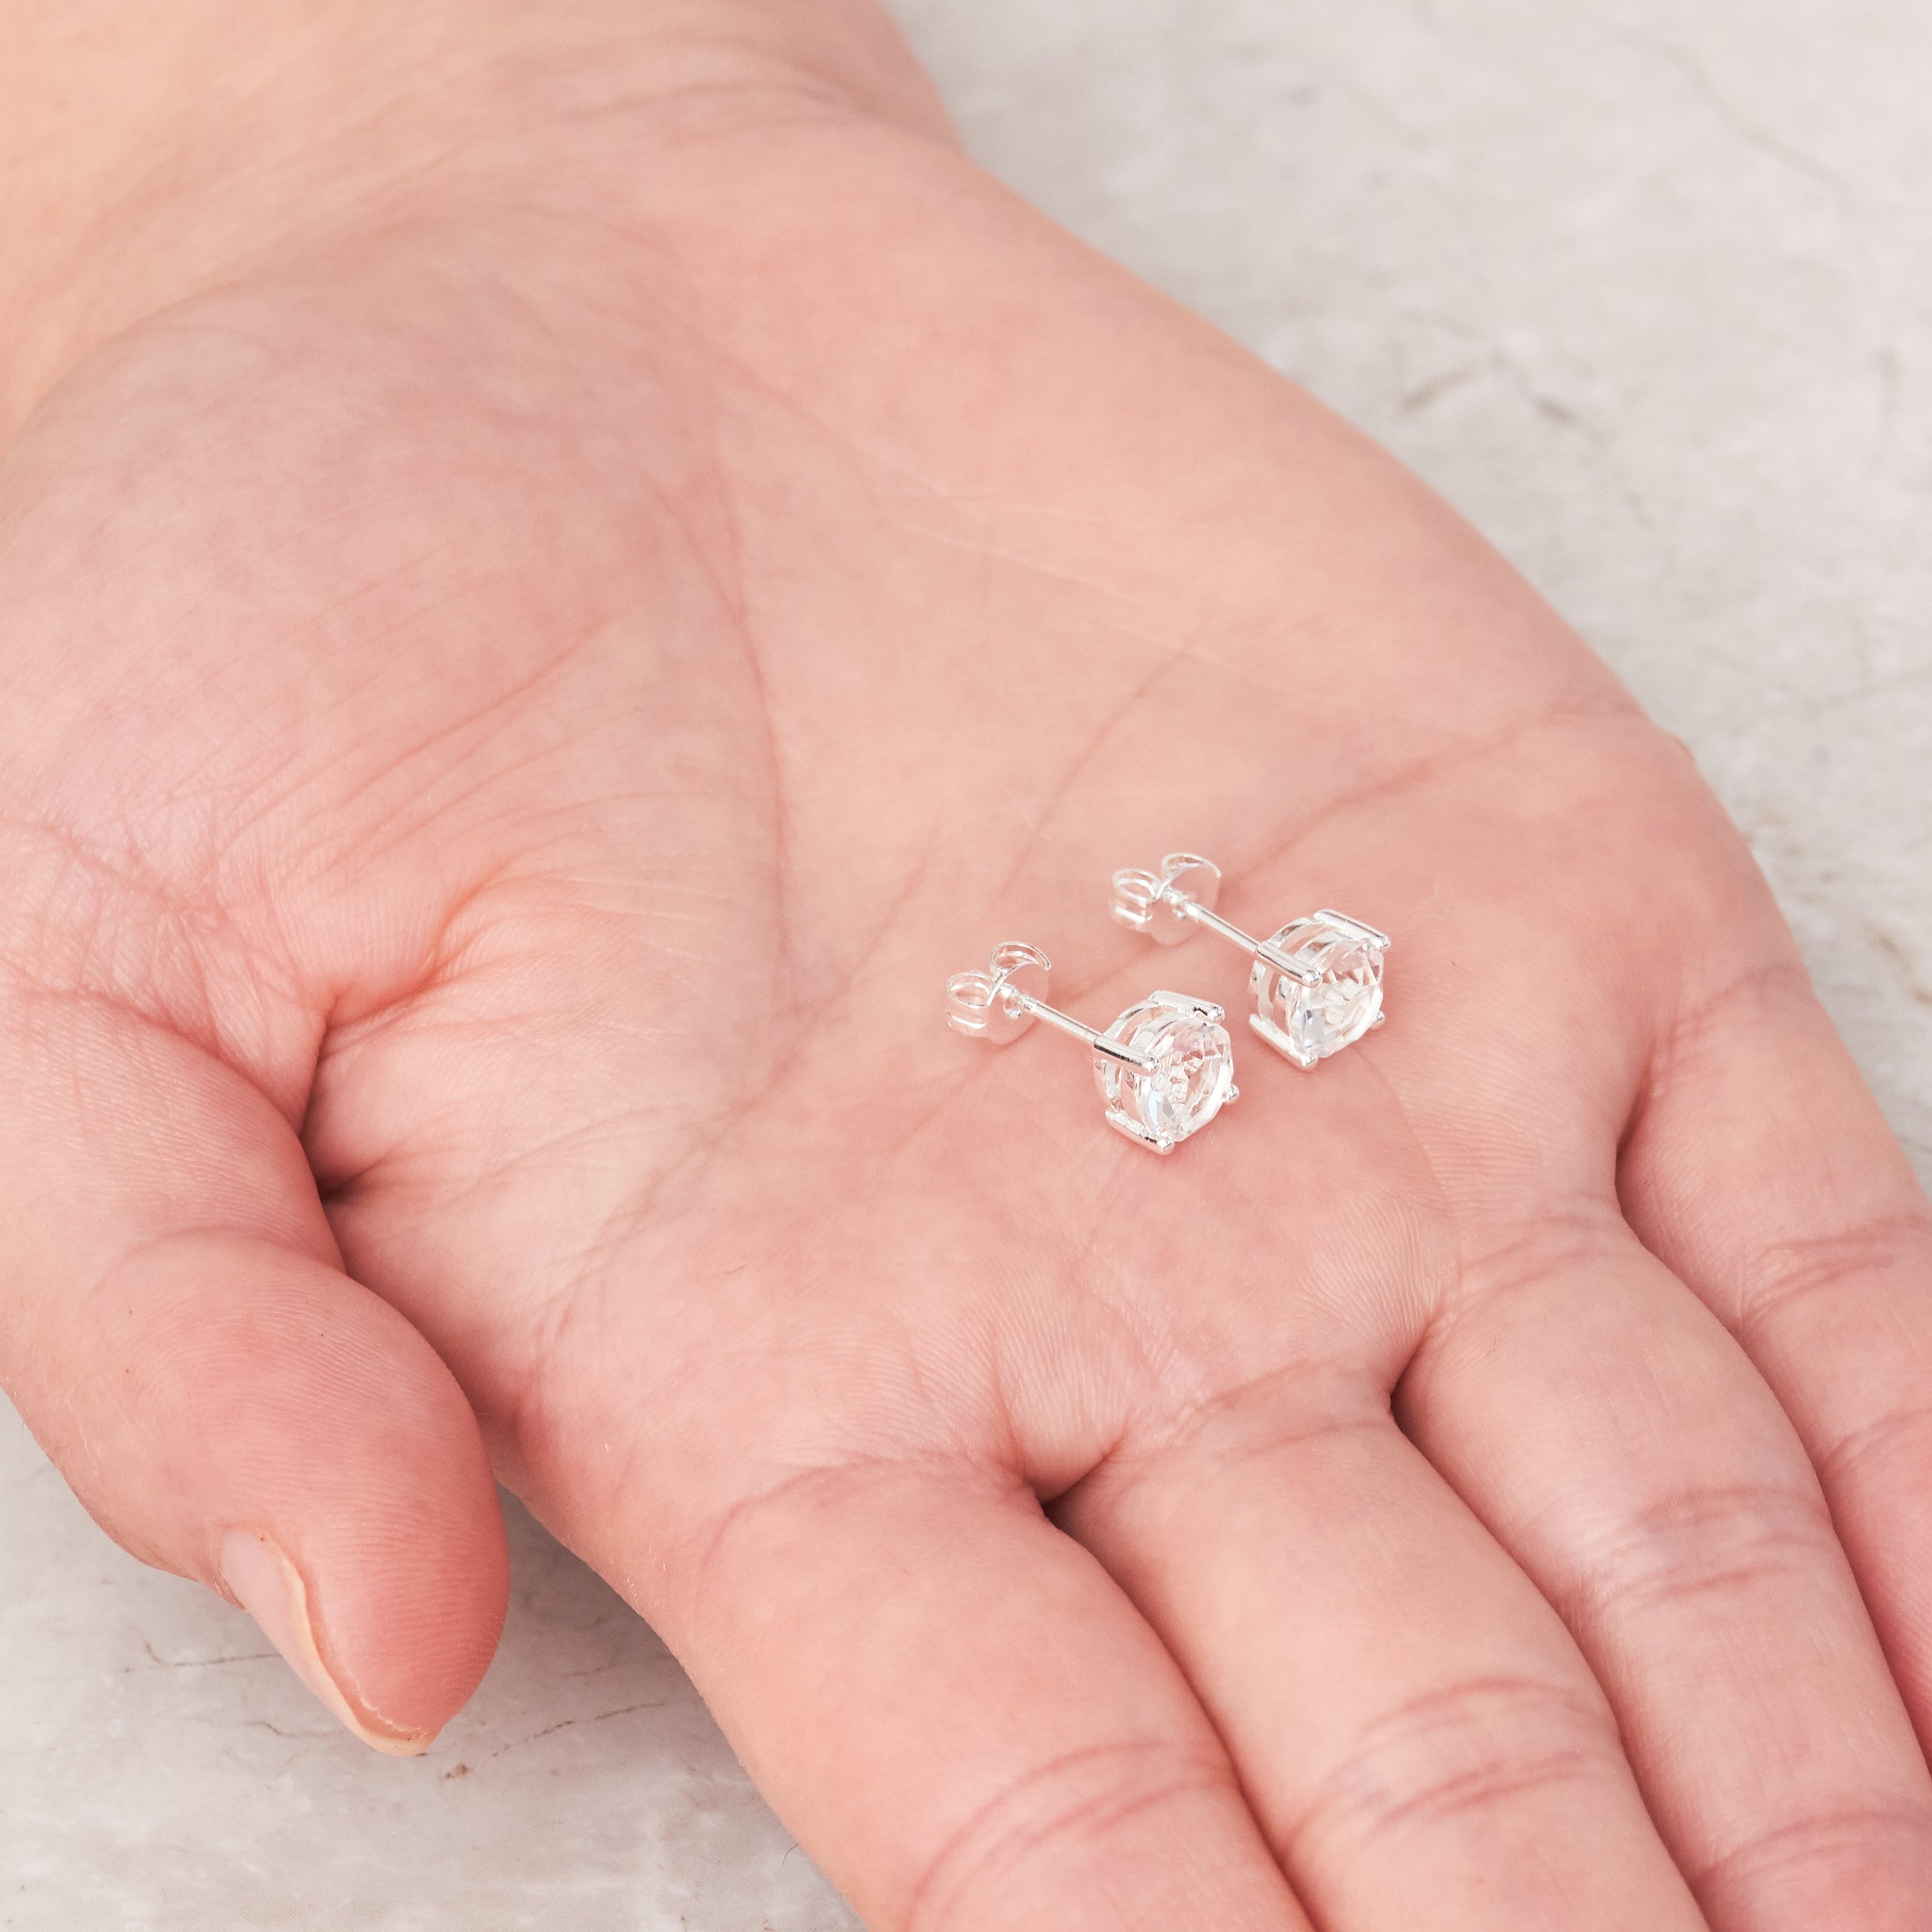 April (Diamond) Birthstone Earrings Created with Zircondia® Crystals